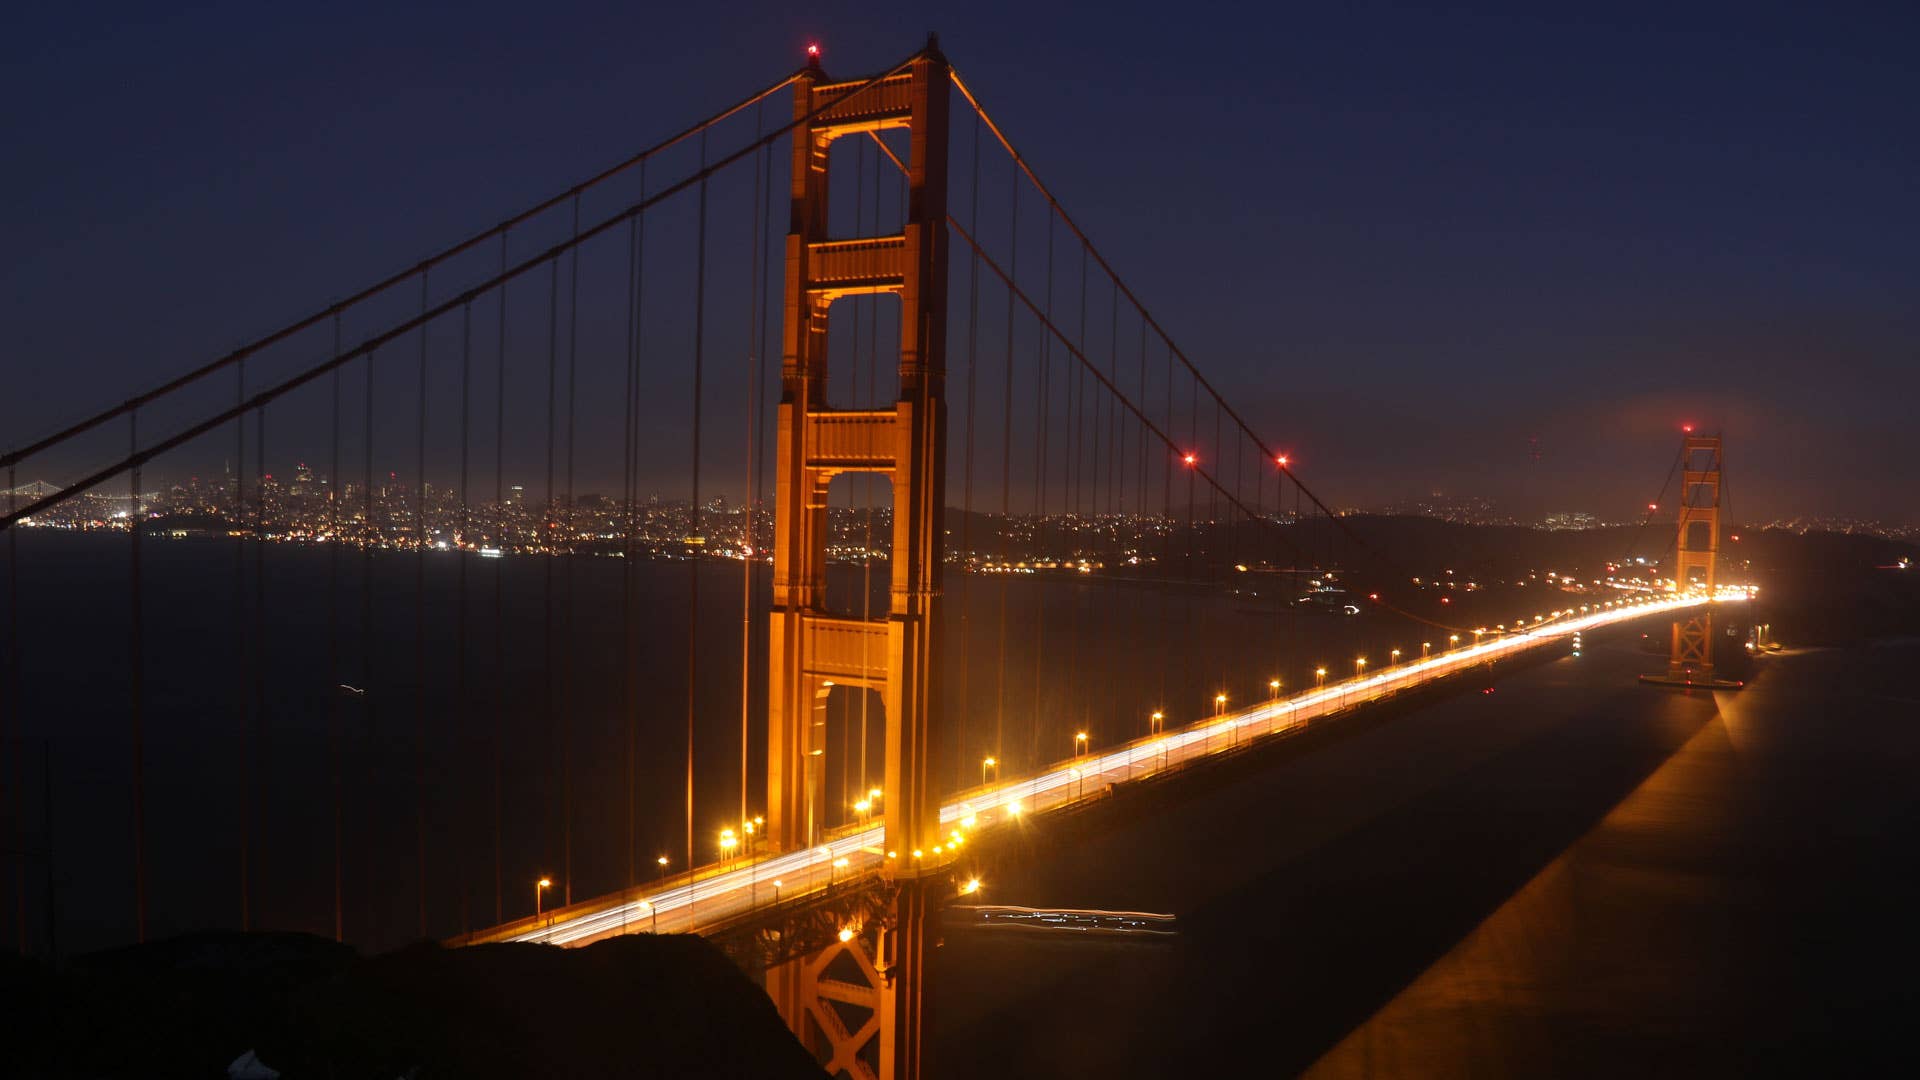 The Golden Gate Bridge at night.